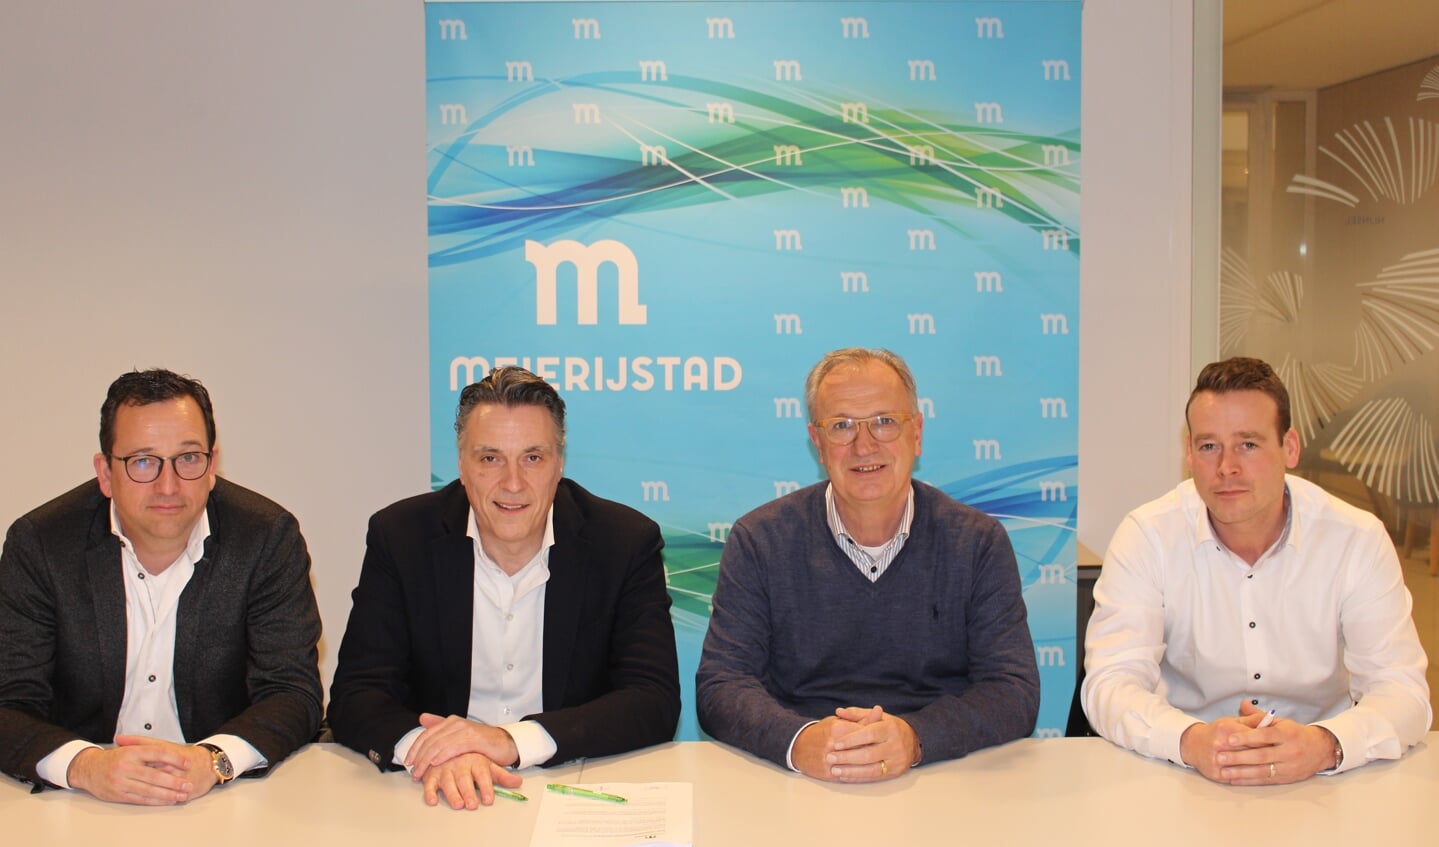 VLNR: Jeroen van Stiphout en Marcel Merks (Van Stiphout Projectontwikkeling),
Jan Goijaarts (gemeente Meierijstad) en Mark Wonders (Woonmeij)